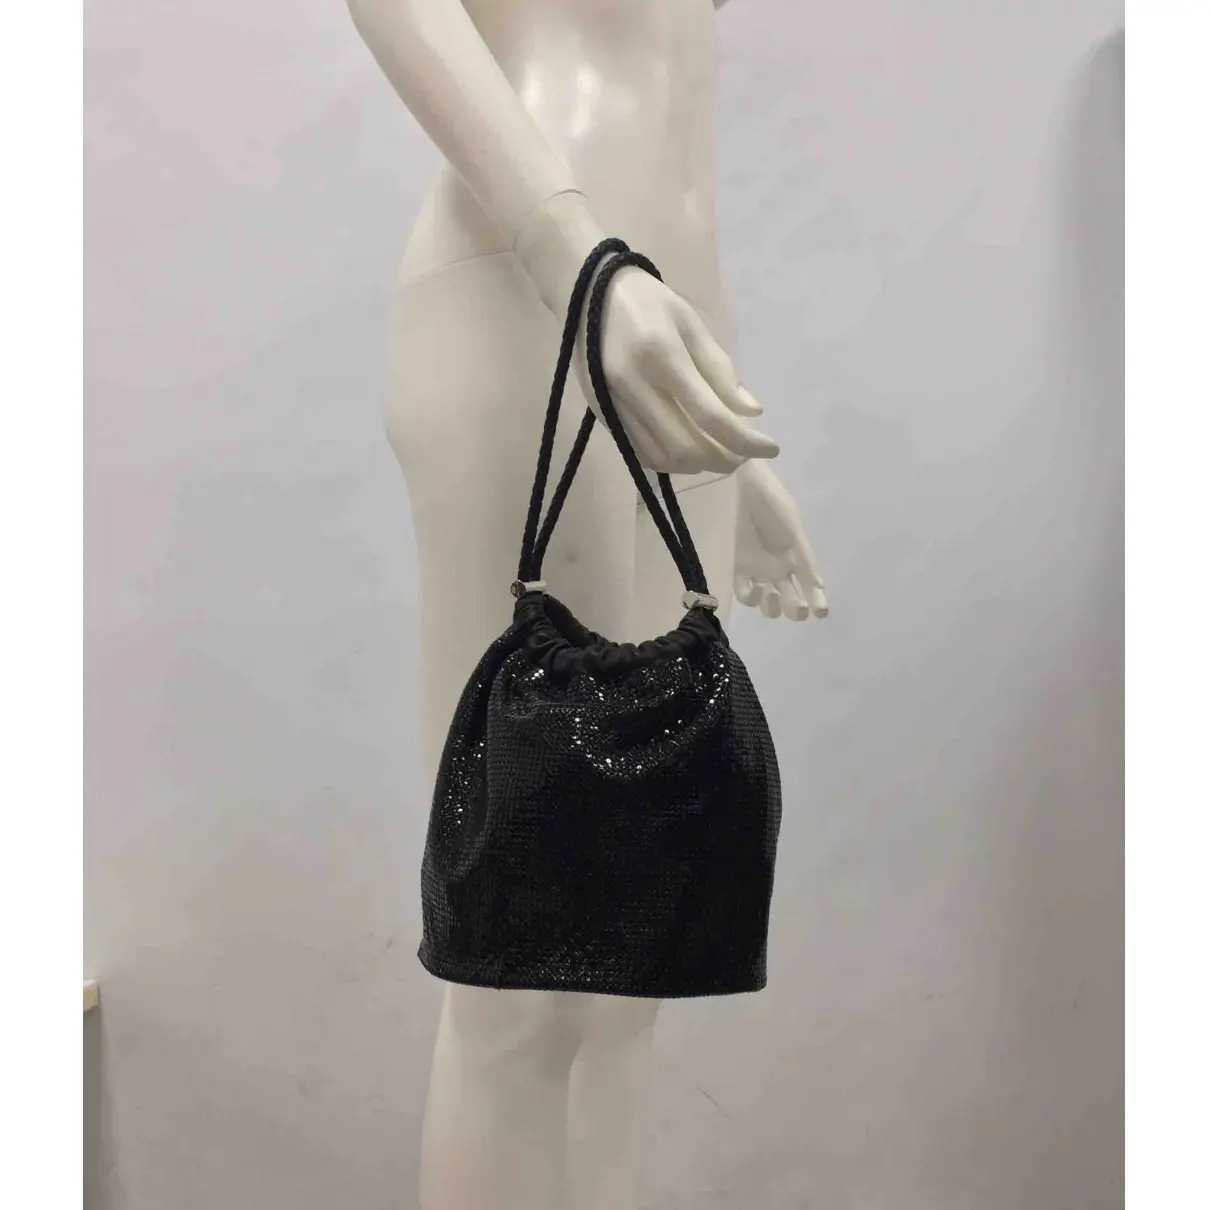 Buy Paco Rabanne Leather handbag online - Vintage